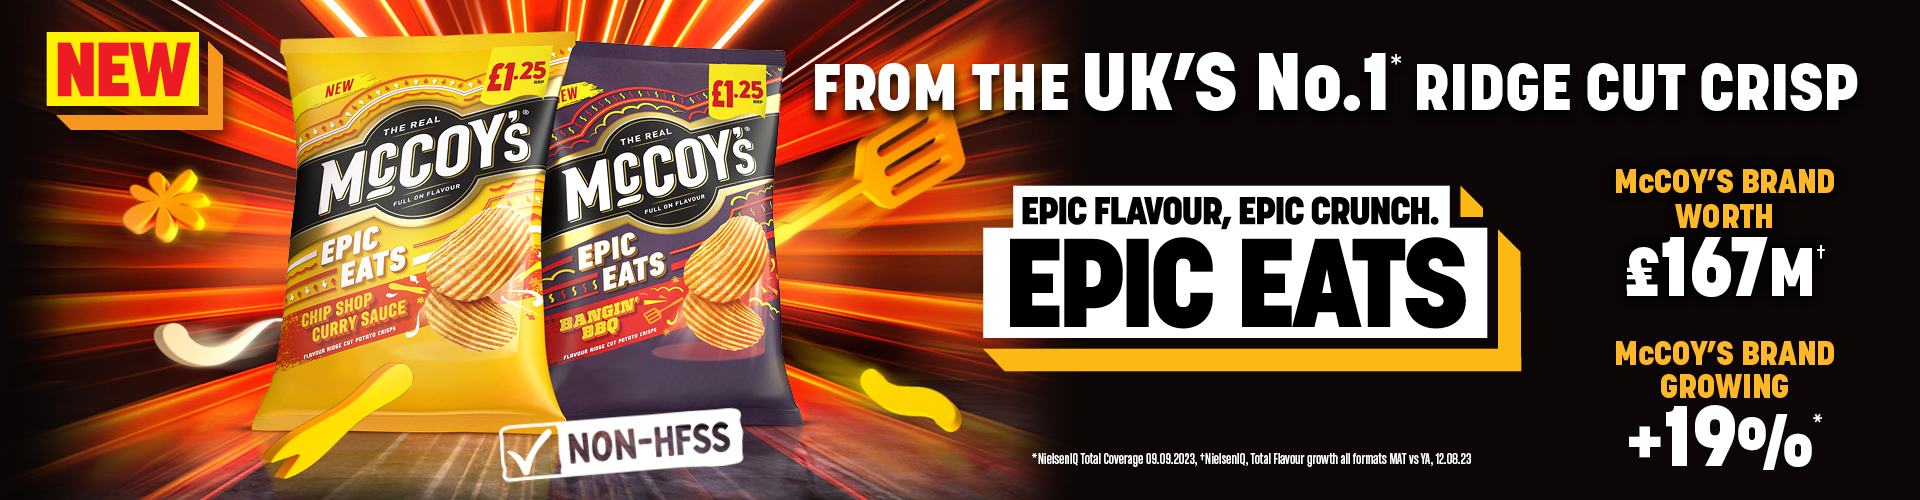 McCoys Epic Eats £1.25